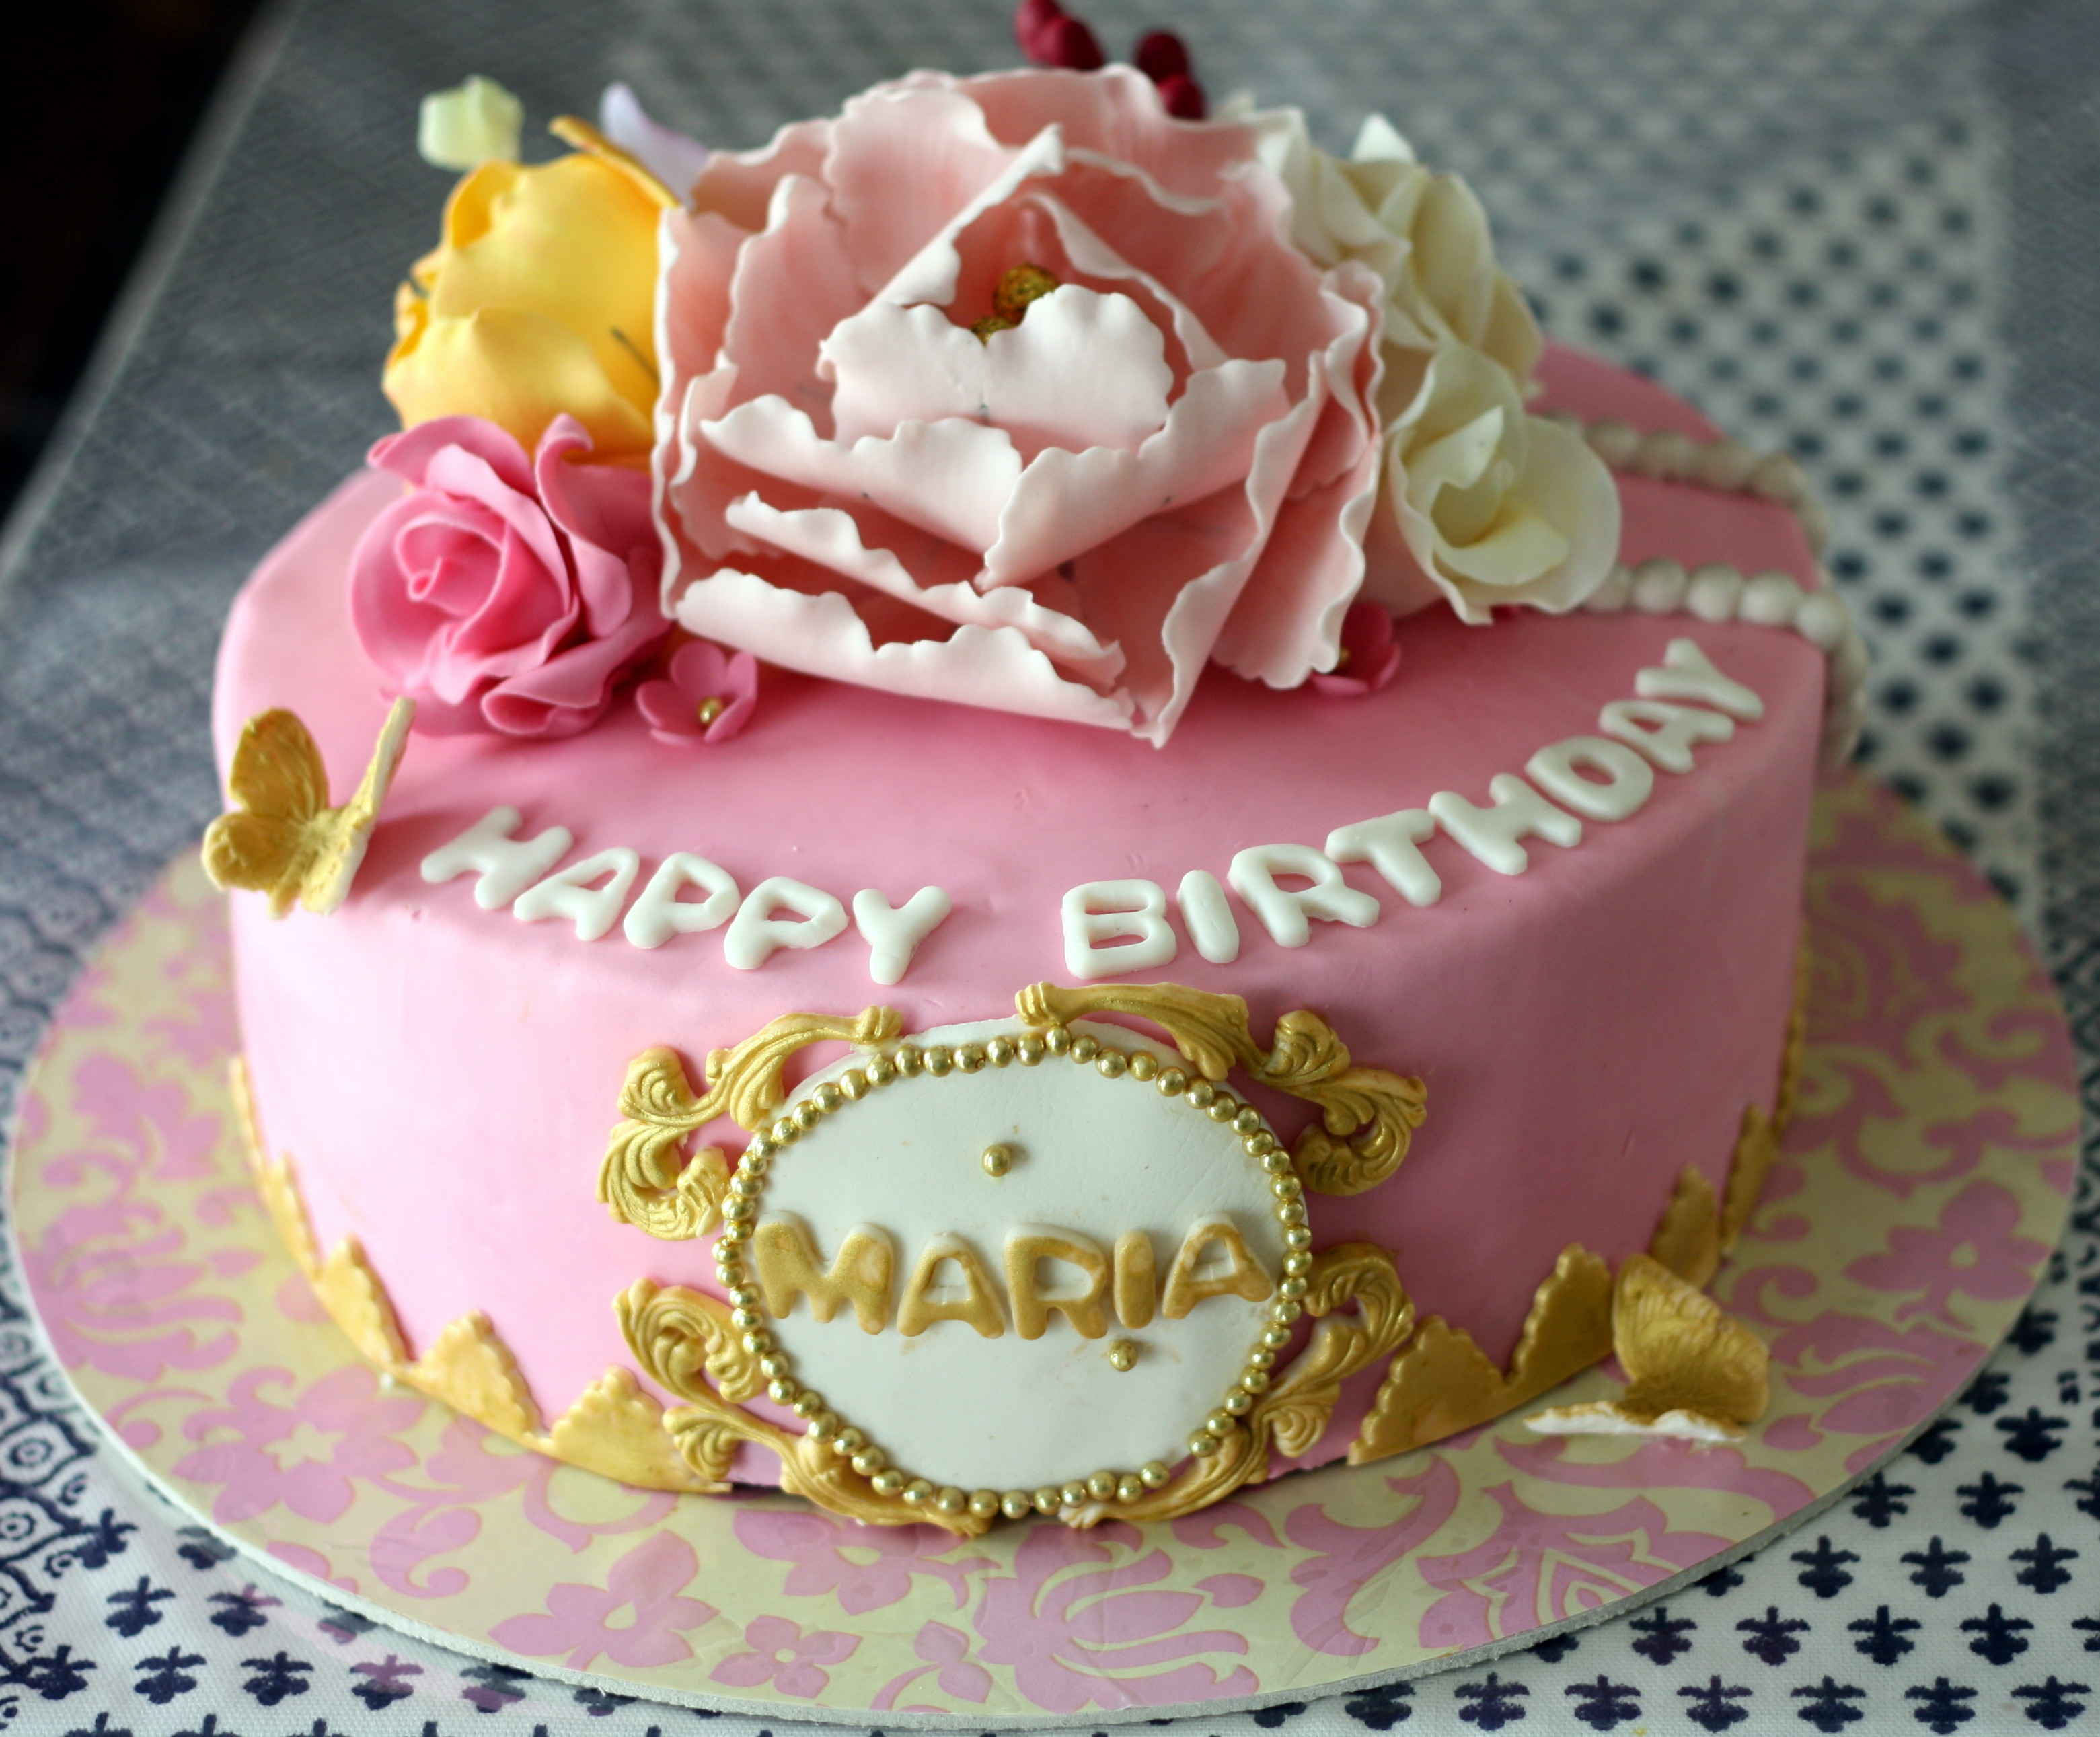 customized birthday cake for maria